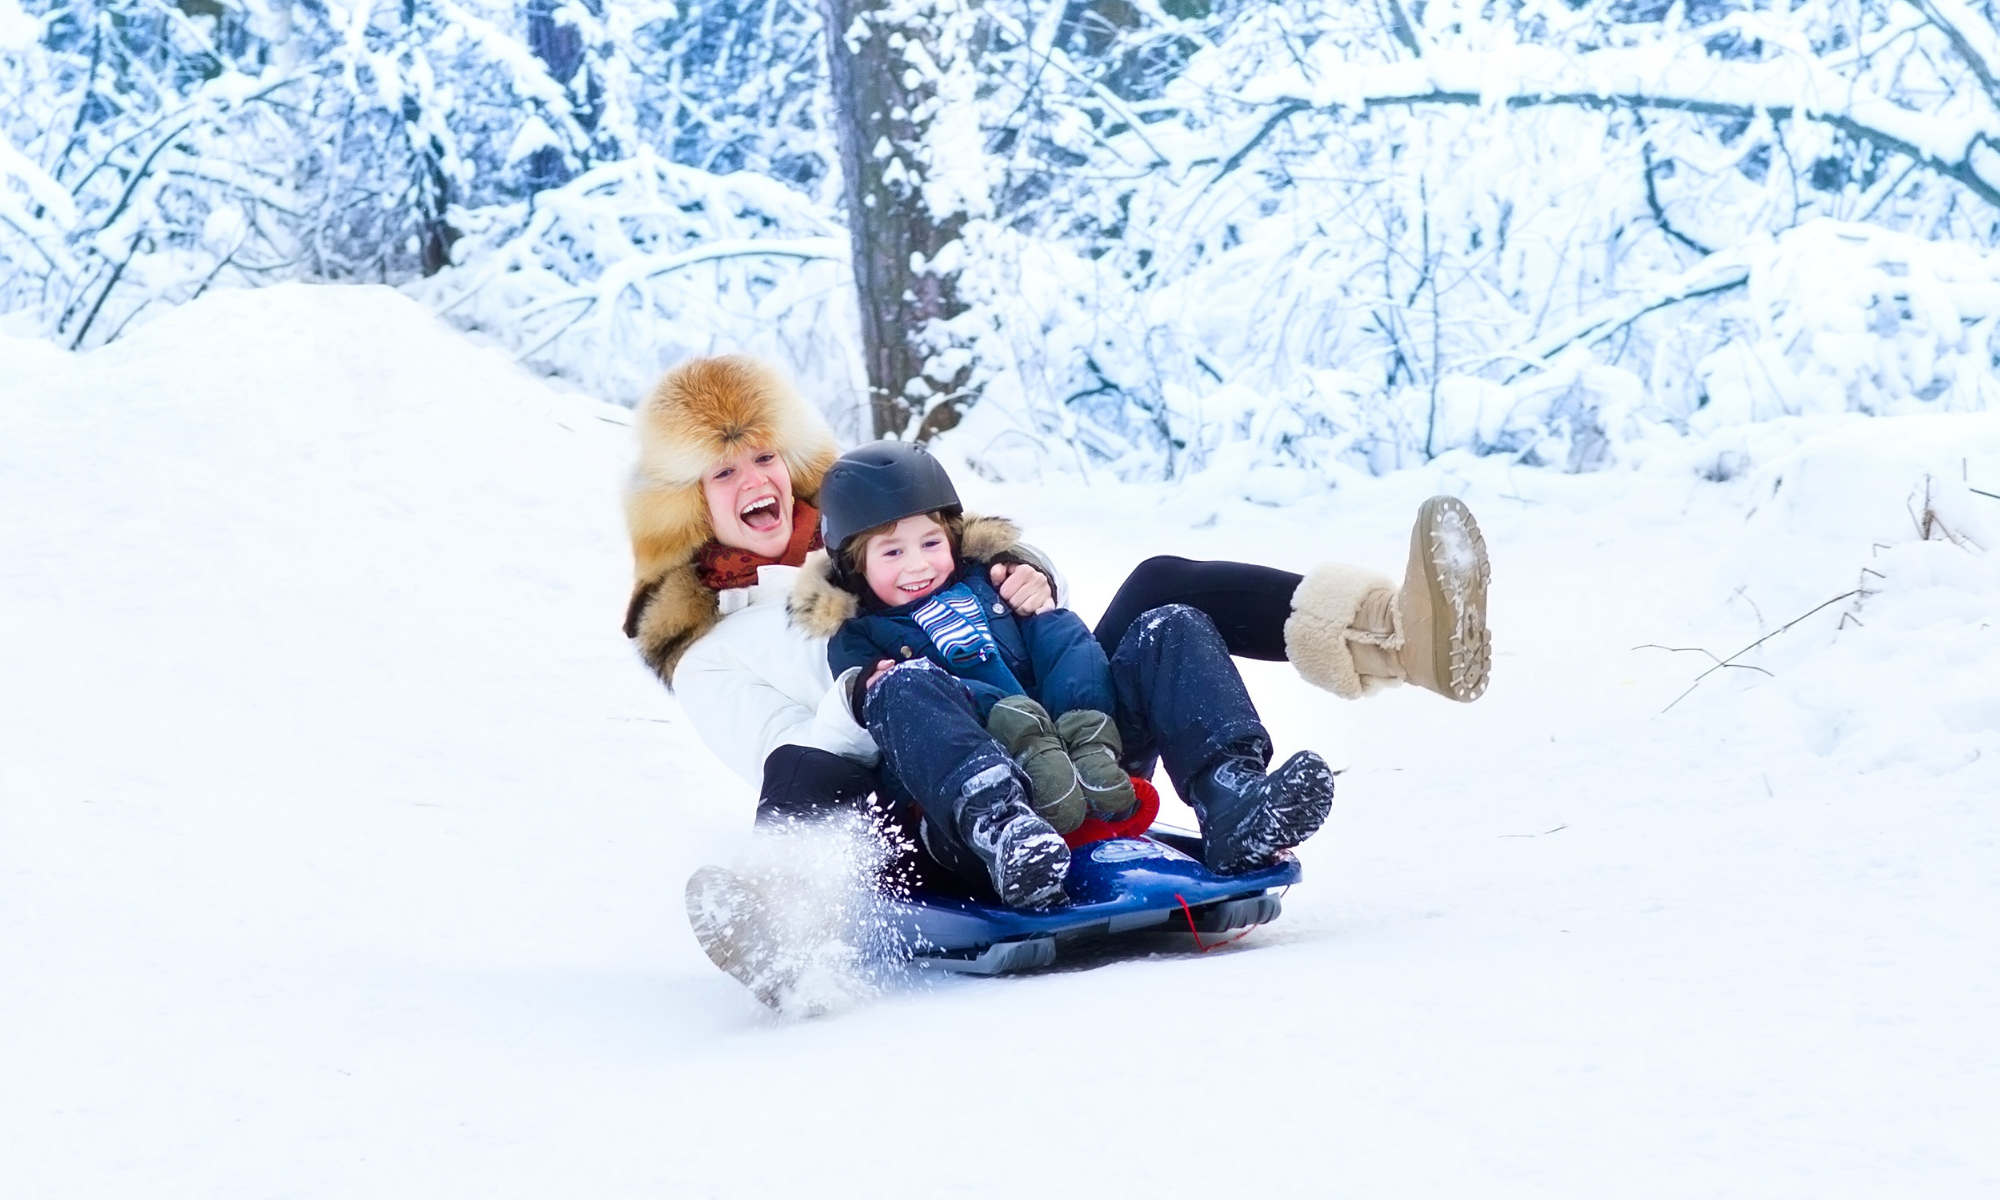 sledding, winter activities, festive, holiday, tubing